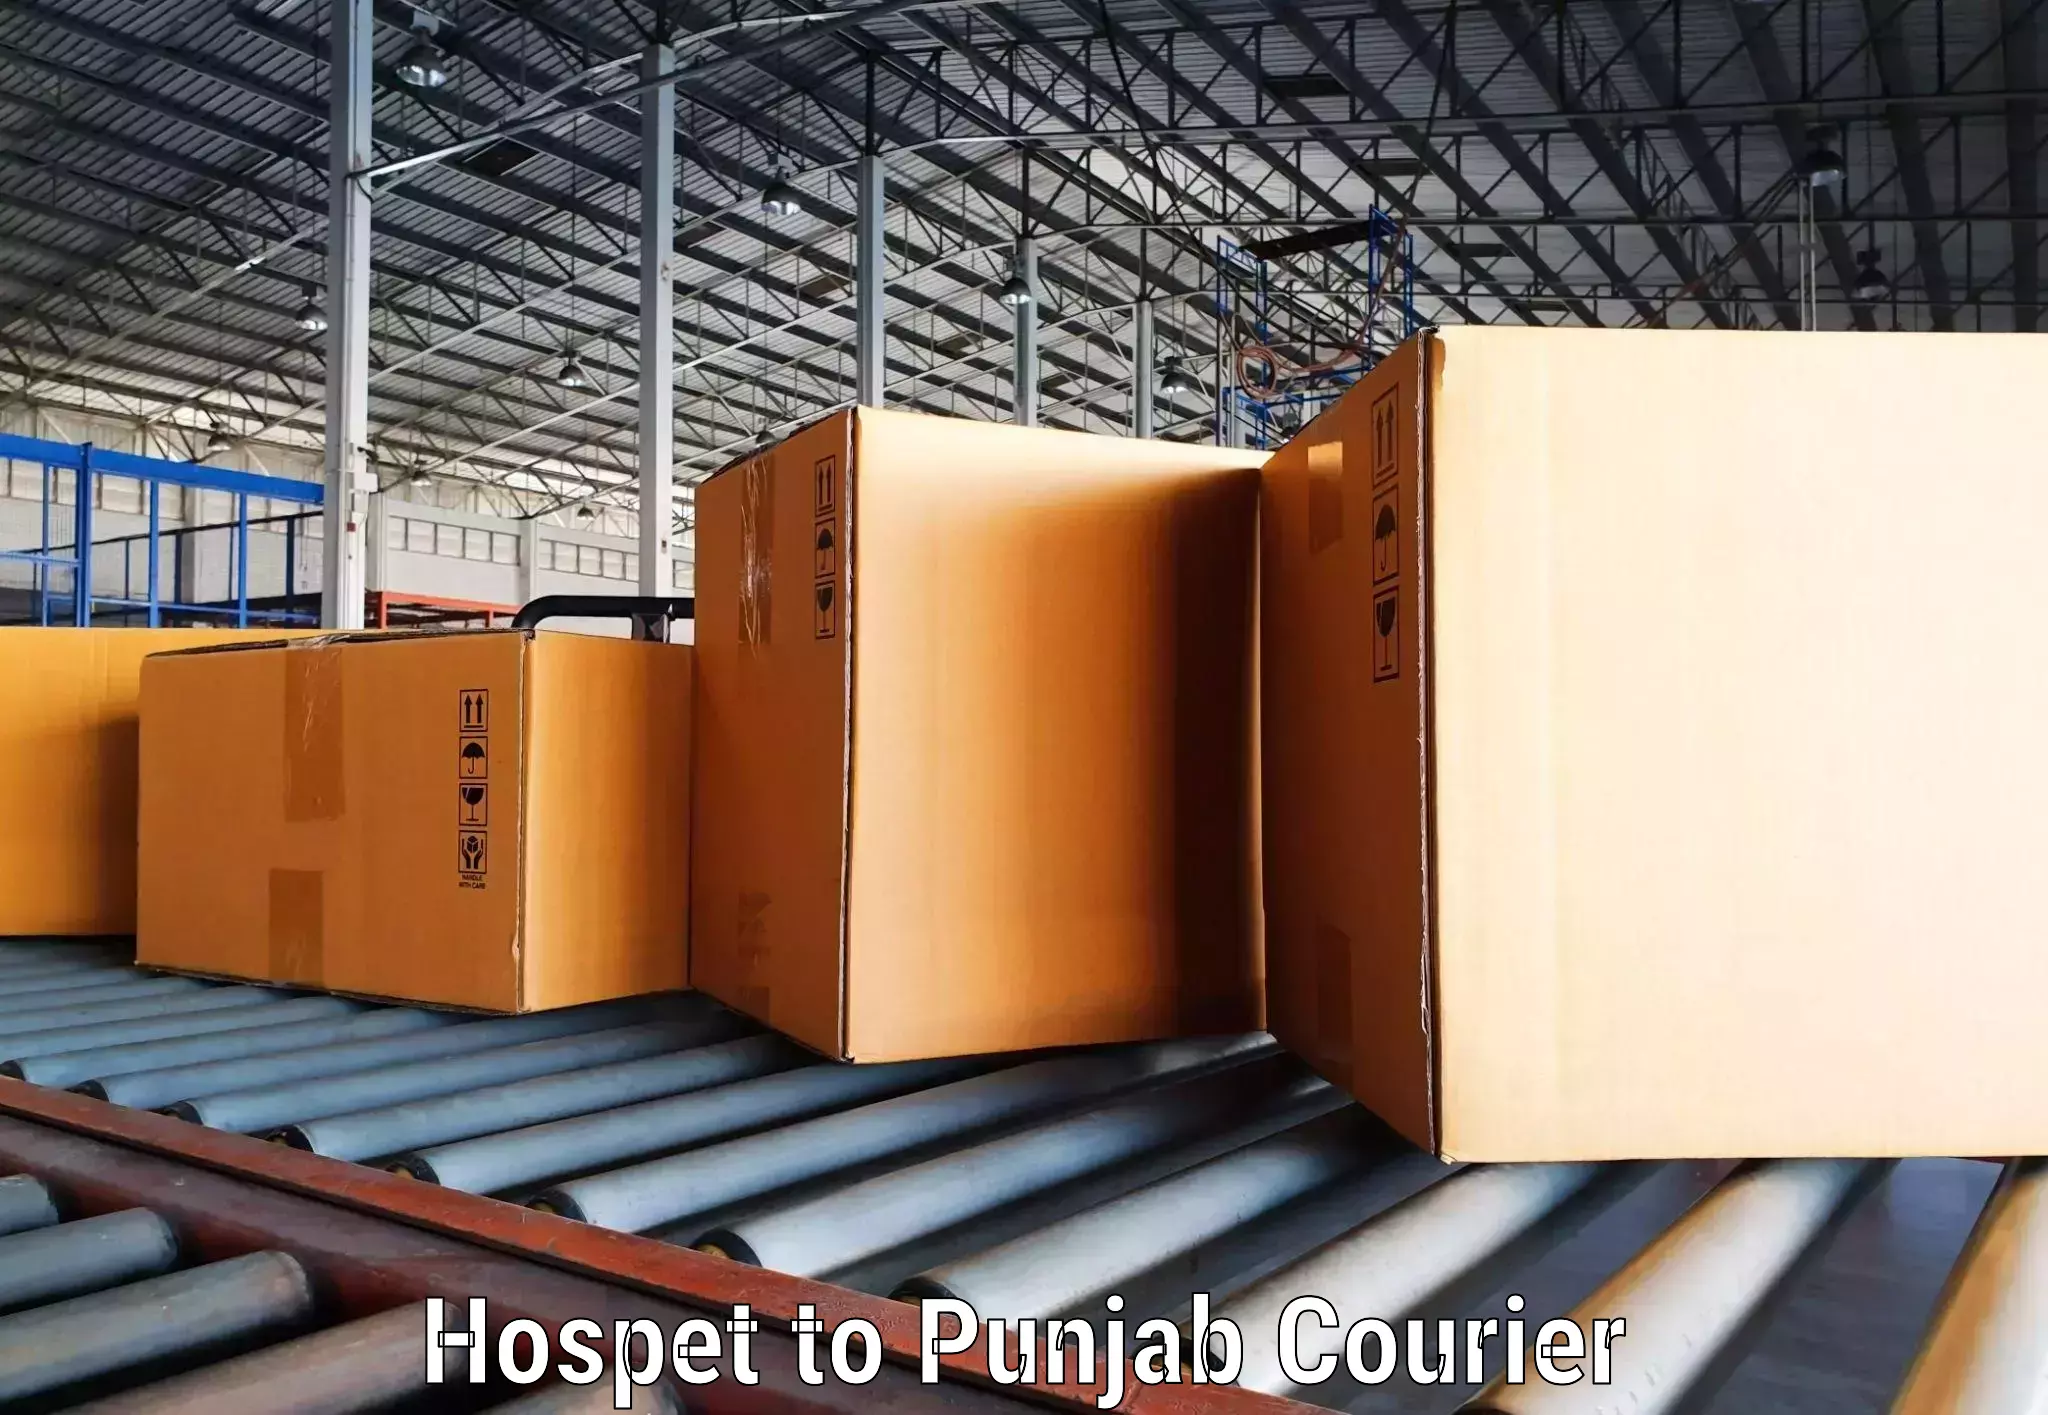 Pharmaceutical courier Hospet to Punjab